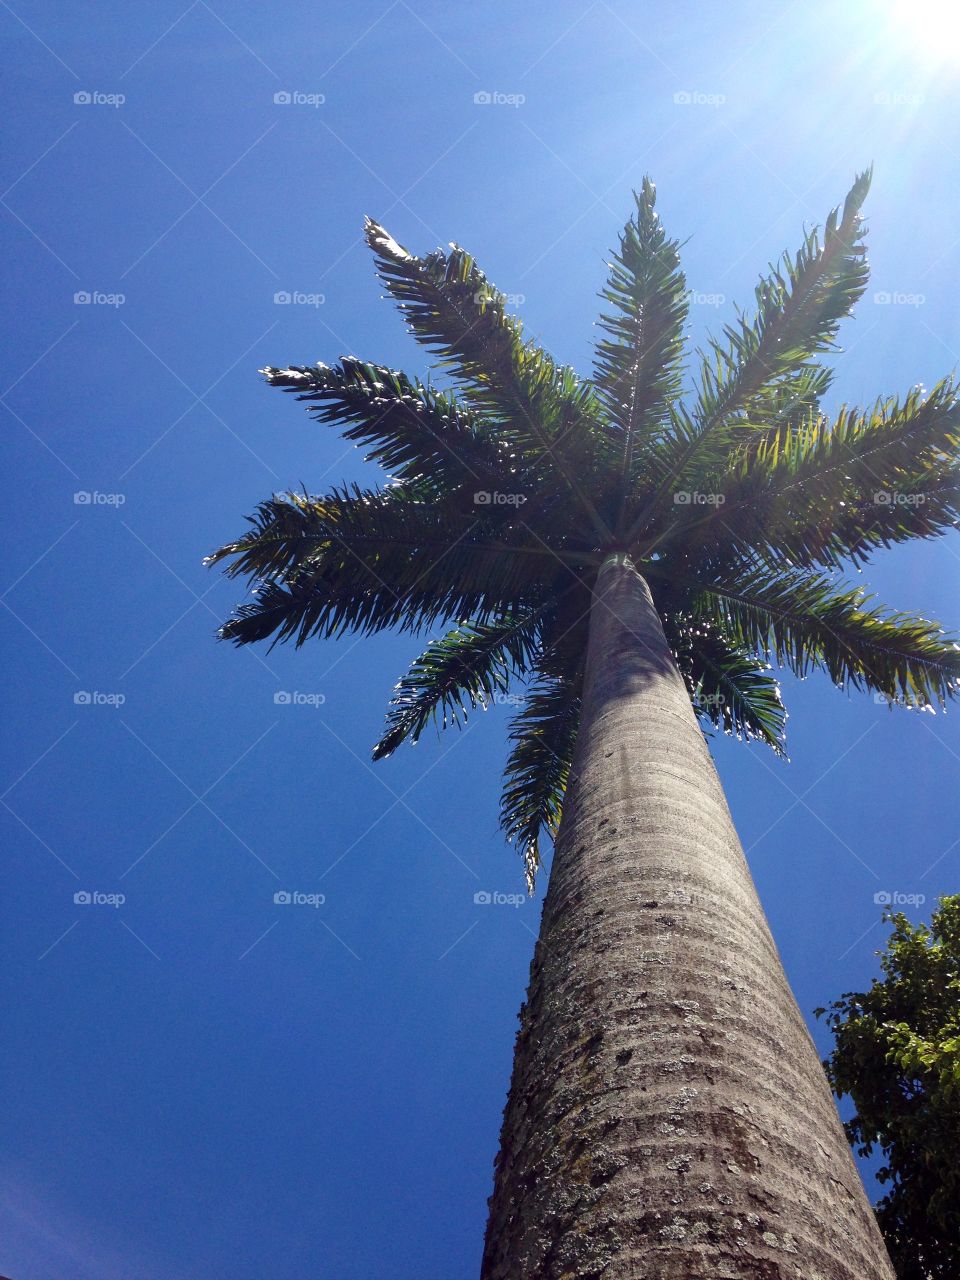 Palm tree. Palm tree